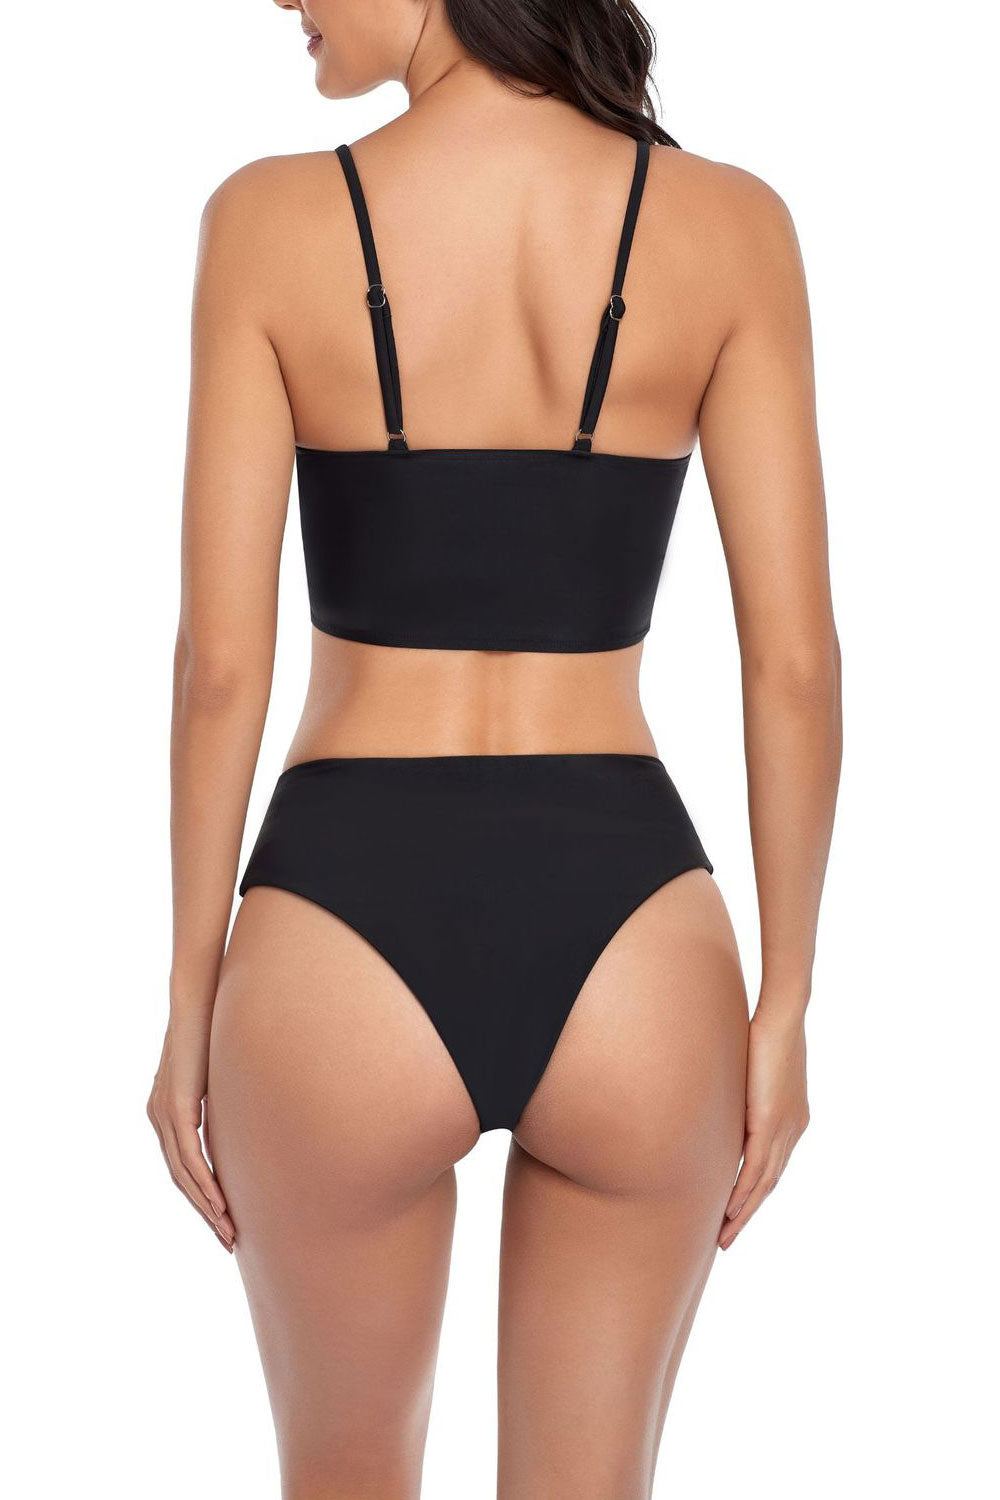 new bikini split swimsuit women's outer sexy solid color bikini swimwear